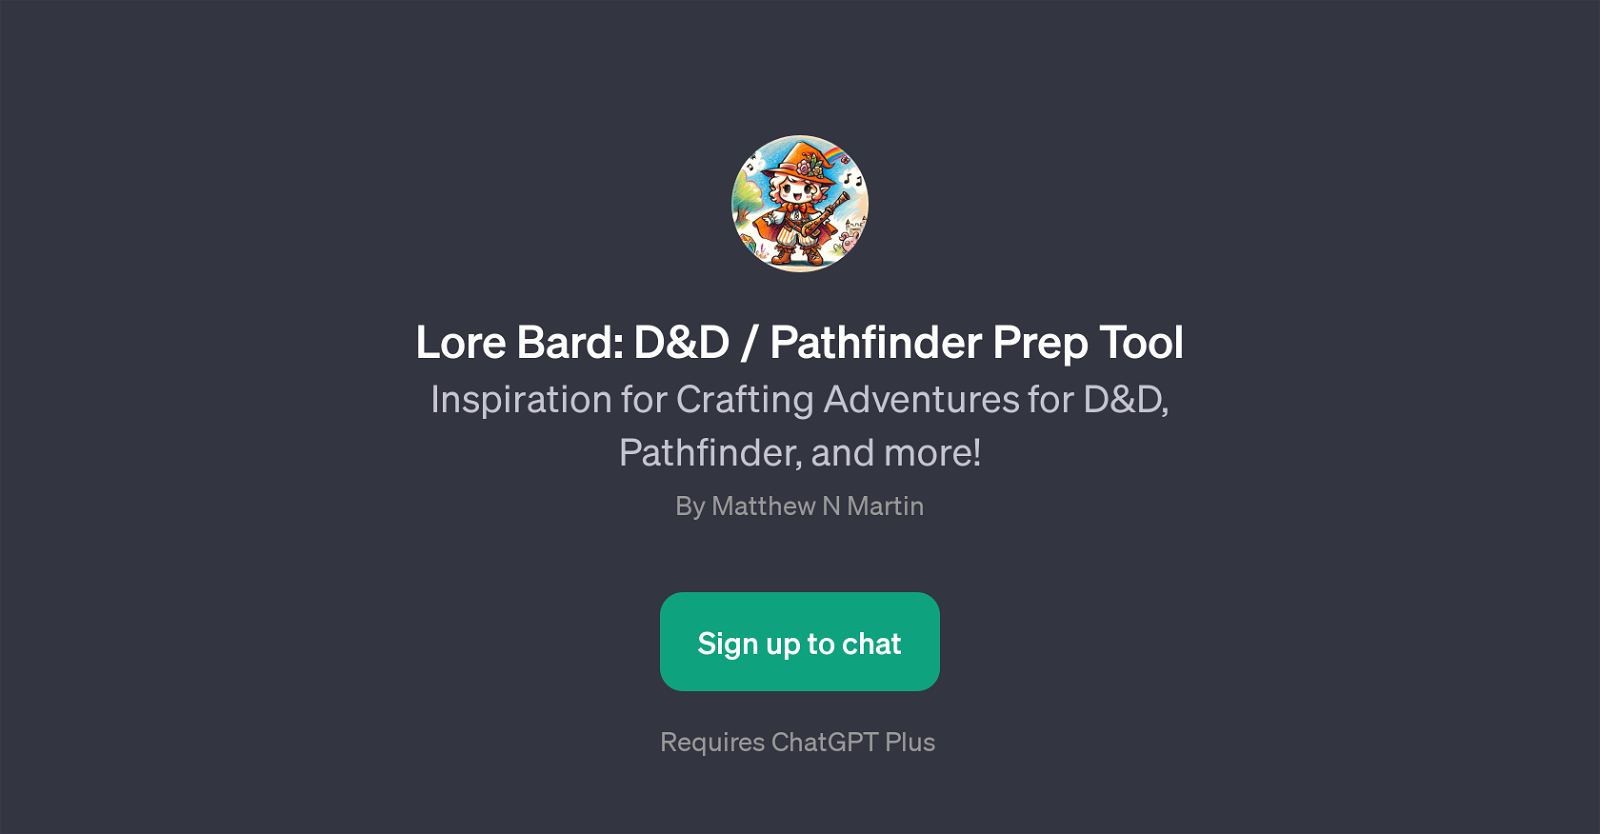 Lore Bard: D&D / Pathfinder Prep Tool website